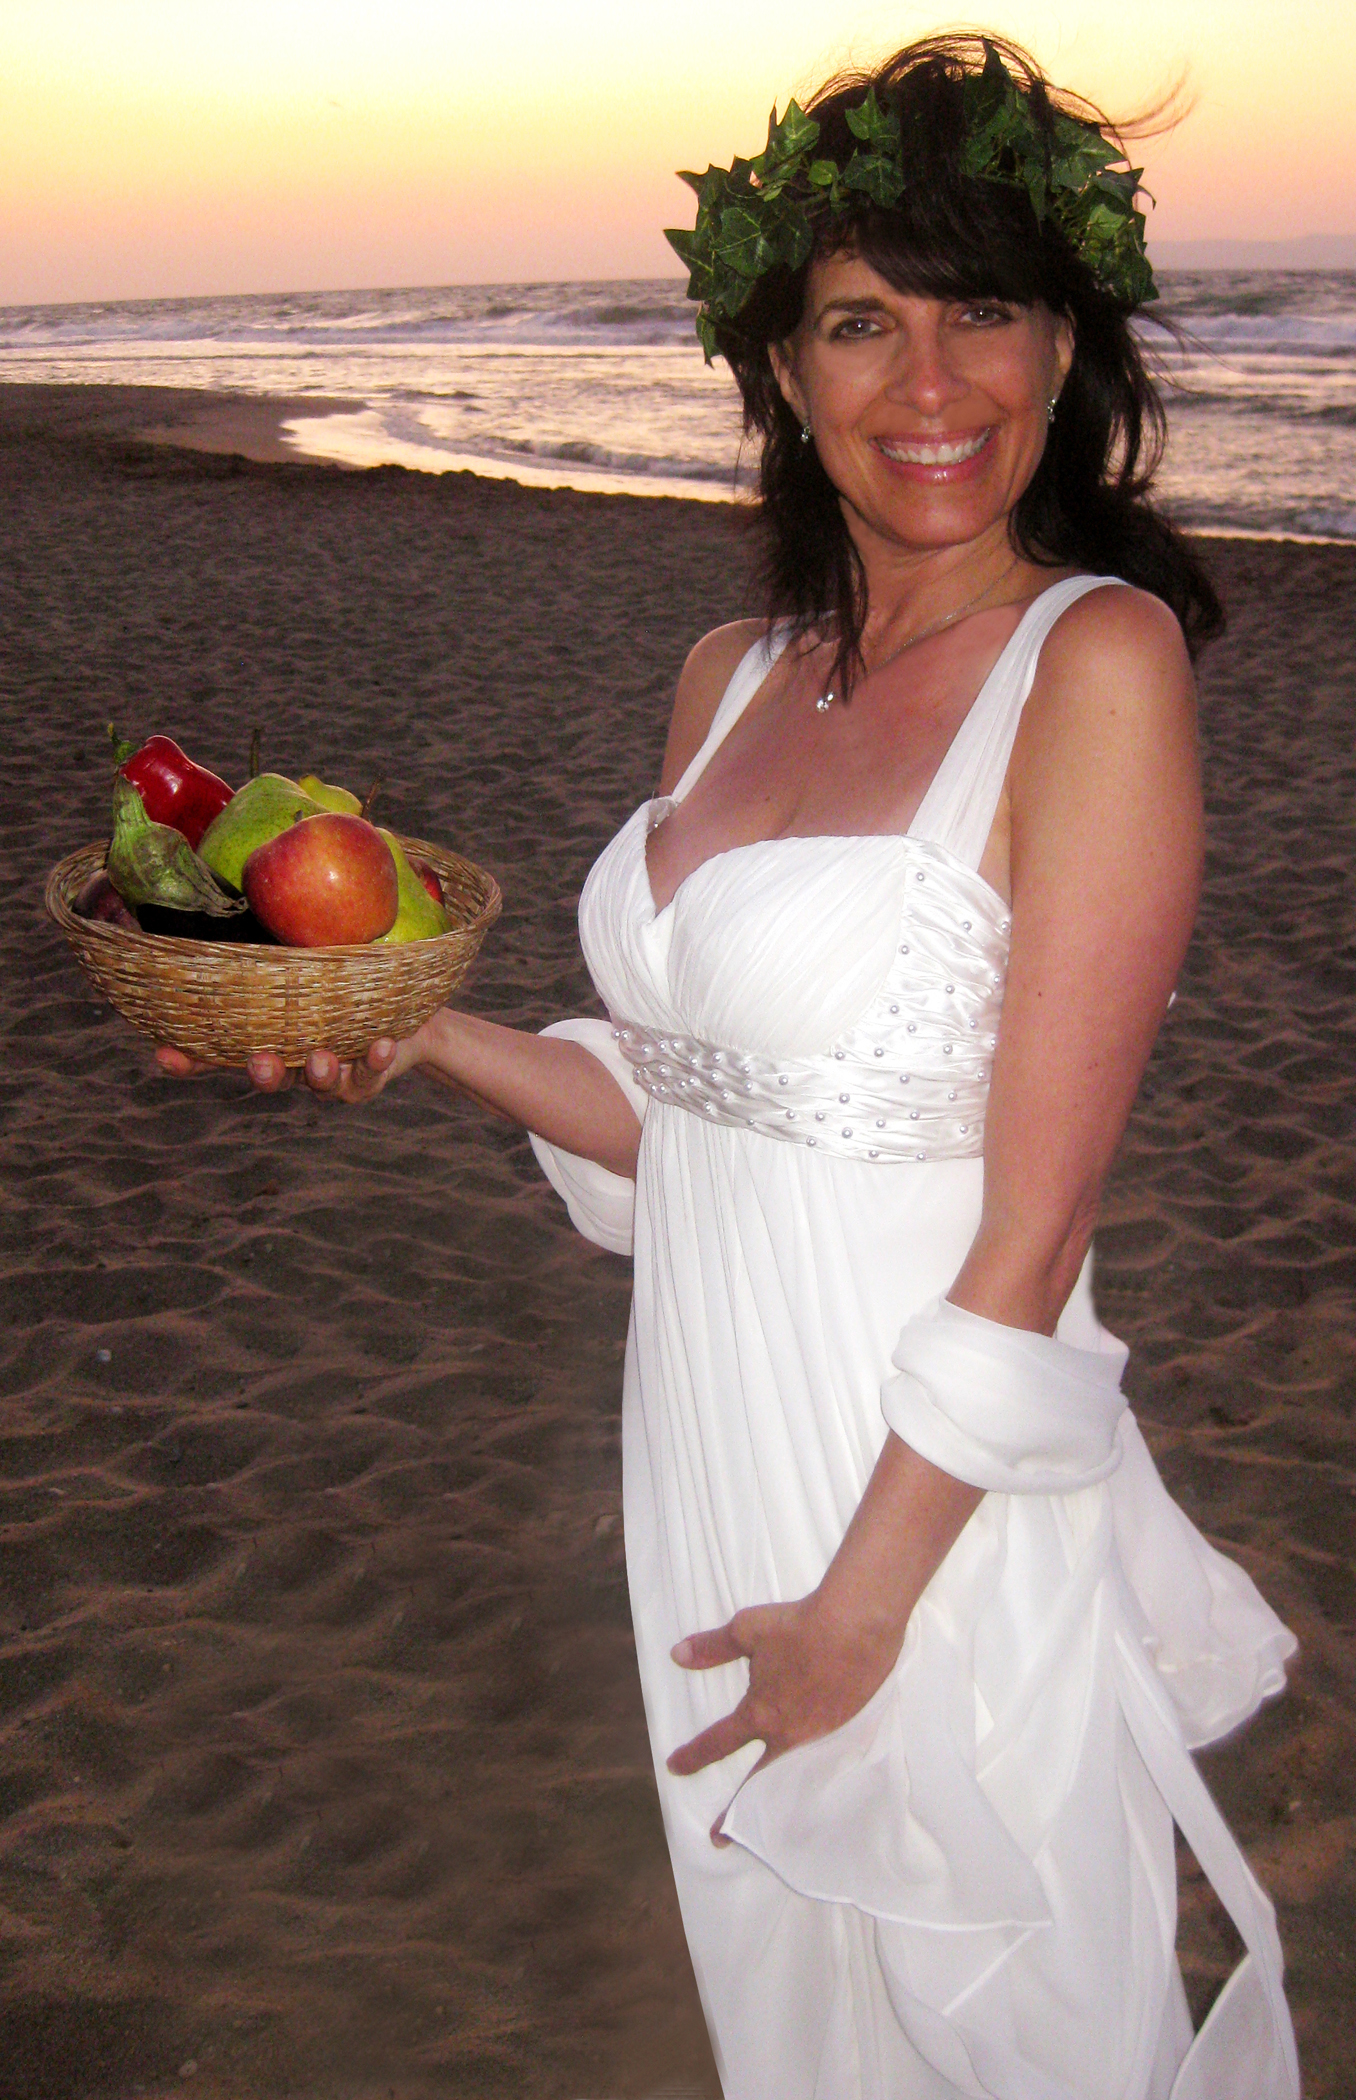 Cynthia Daddona as the goddess of love, wisdom and food on the beach in Greece.